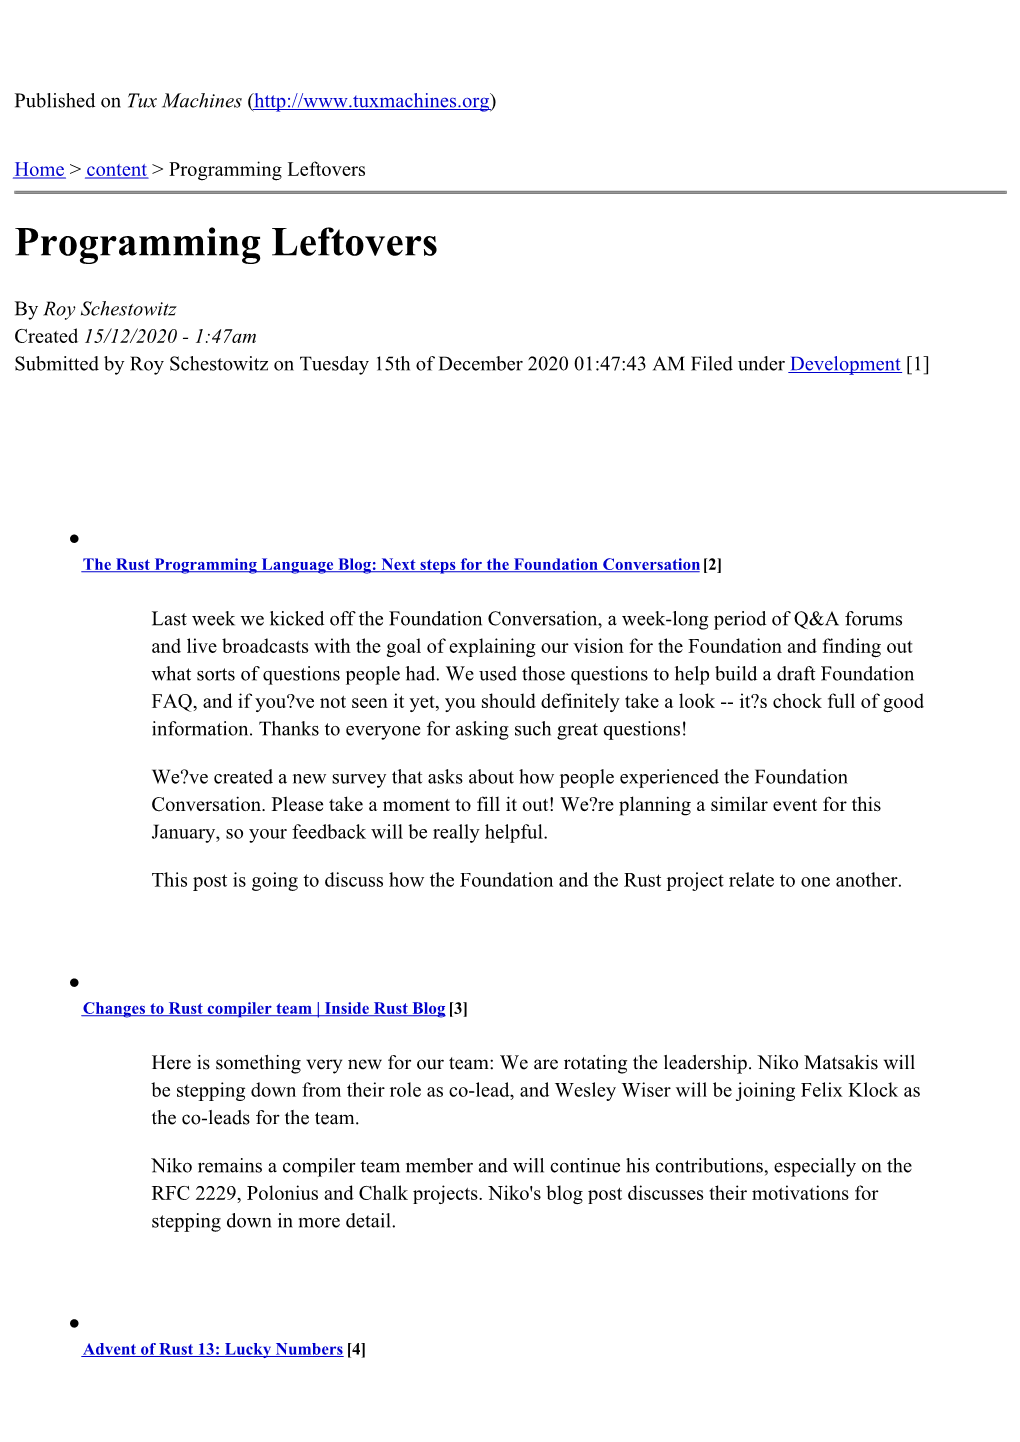 Programming Leftovers